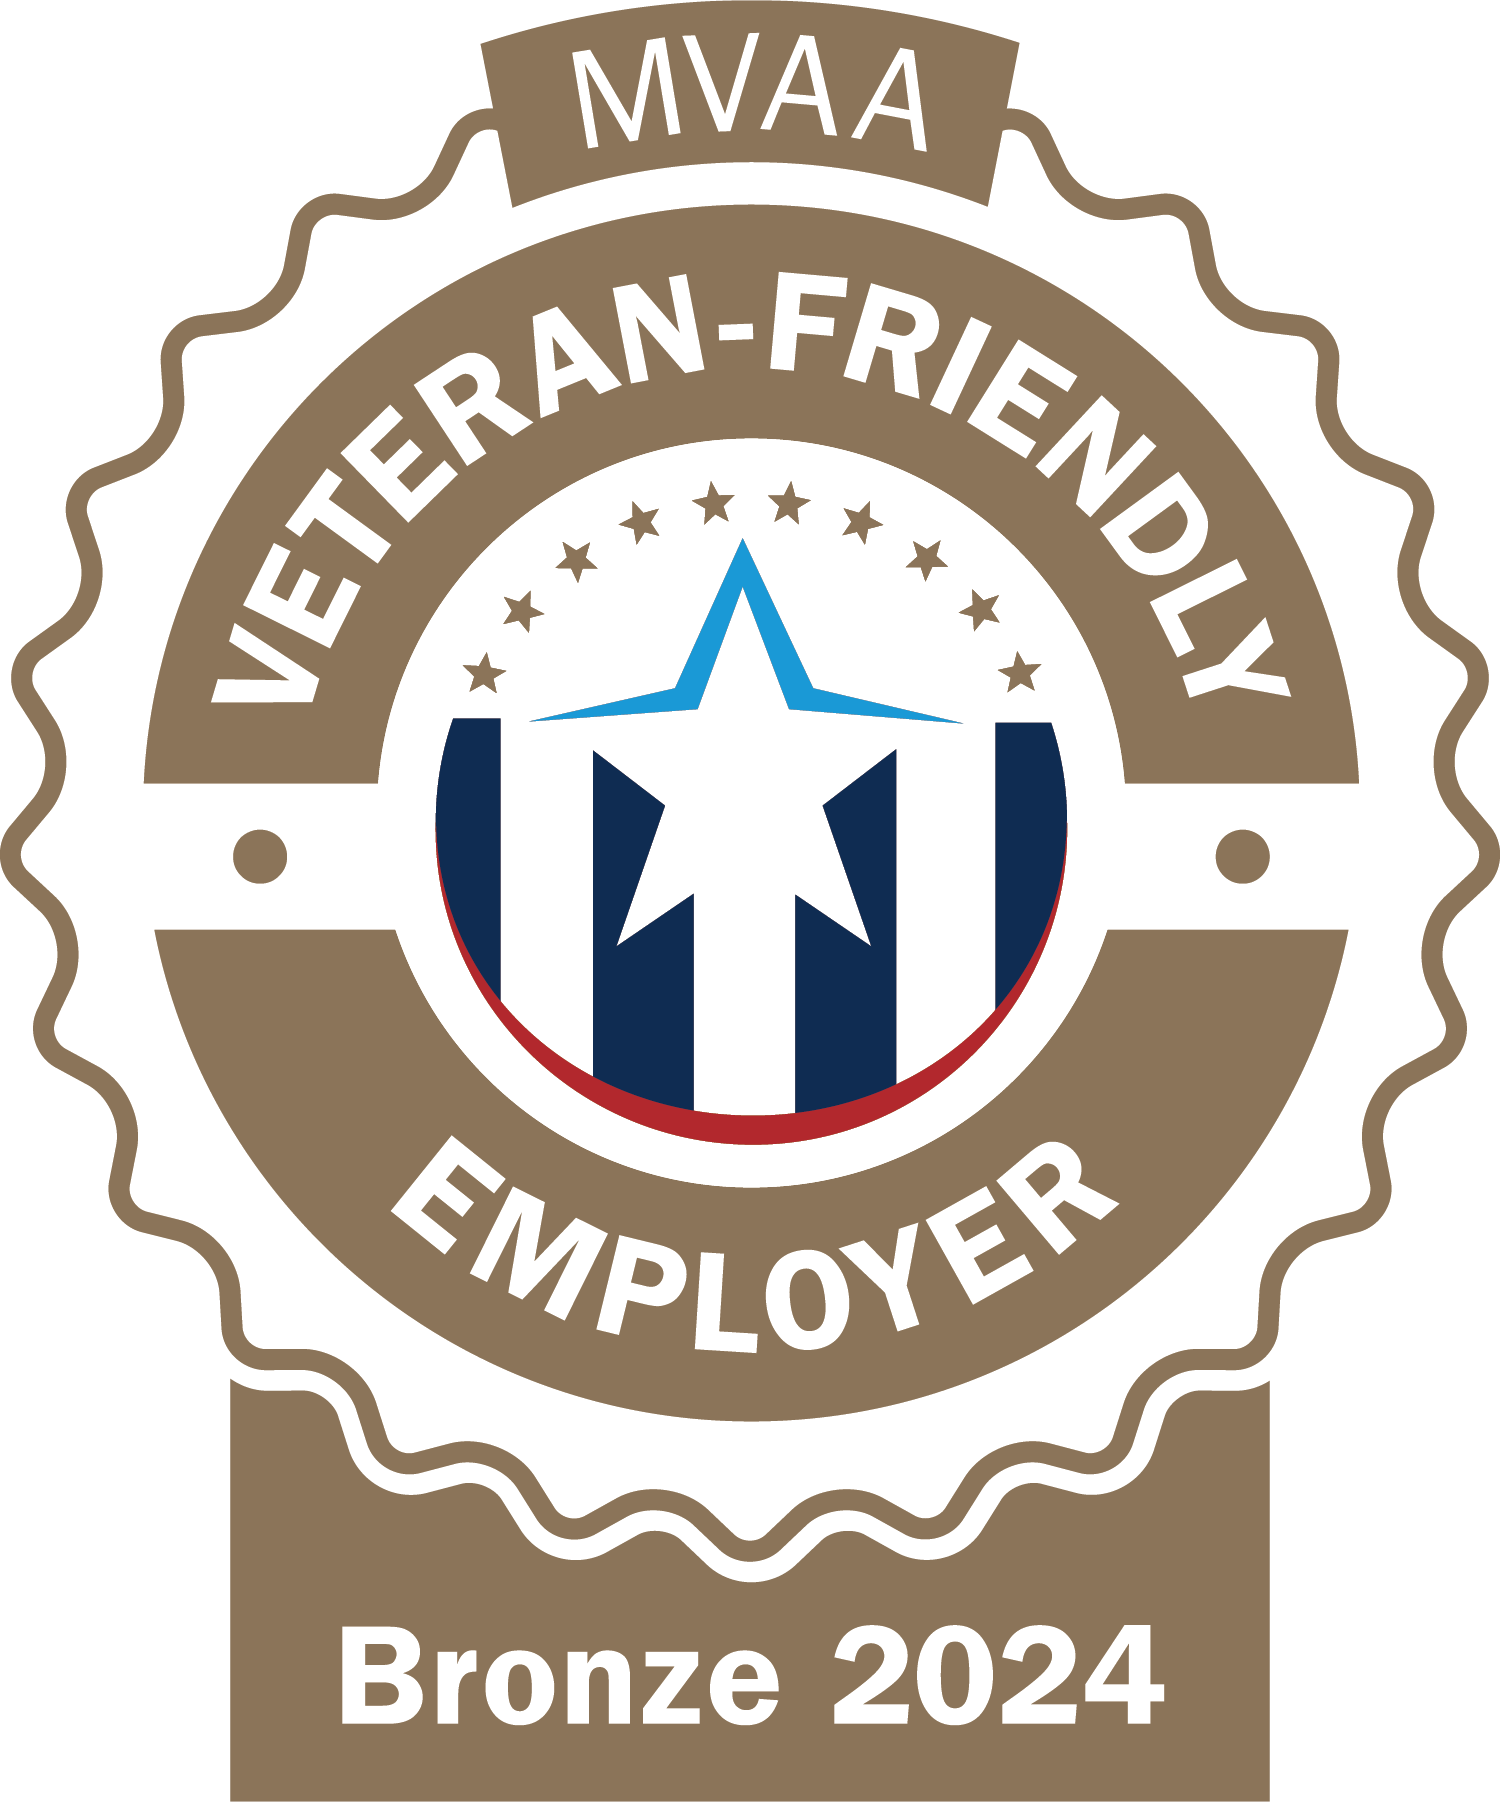 MVAA Veteran-Friendly Employer - Bronze 2024.png